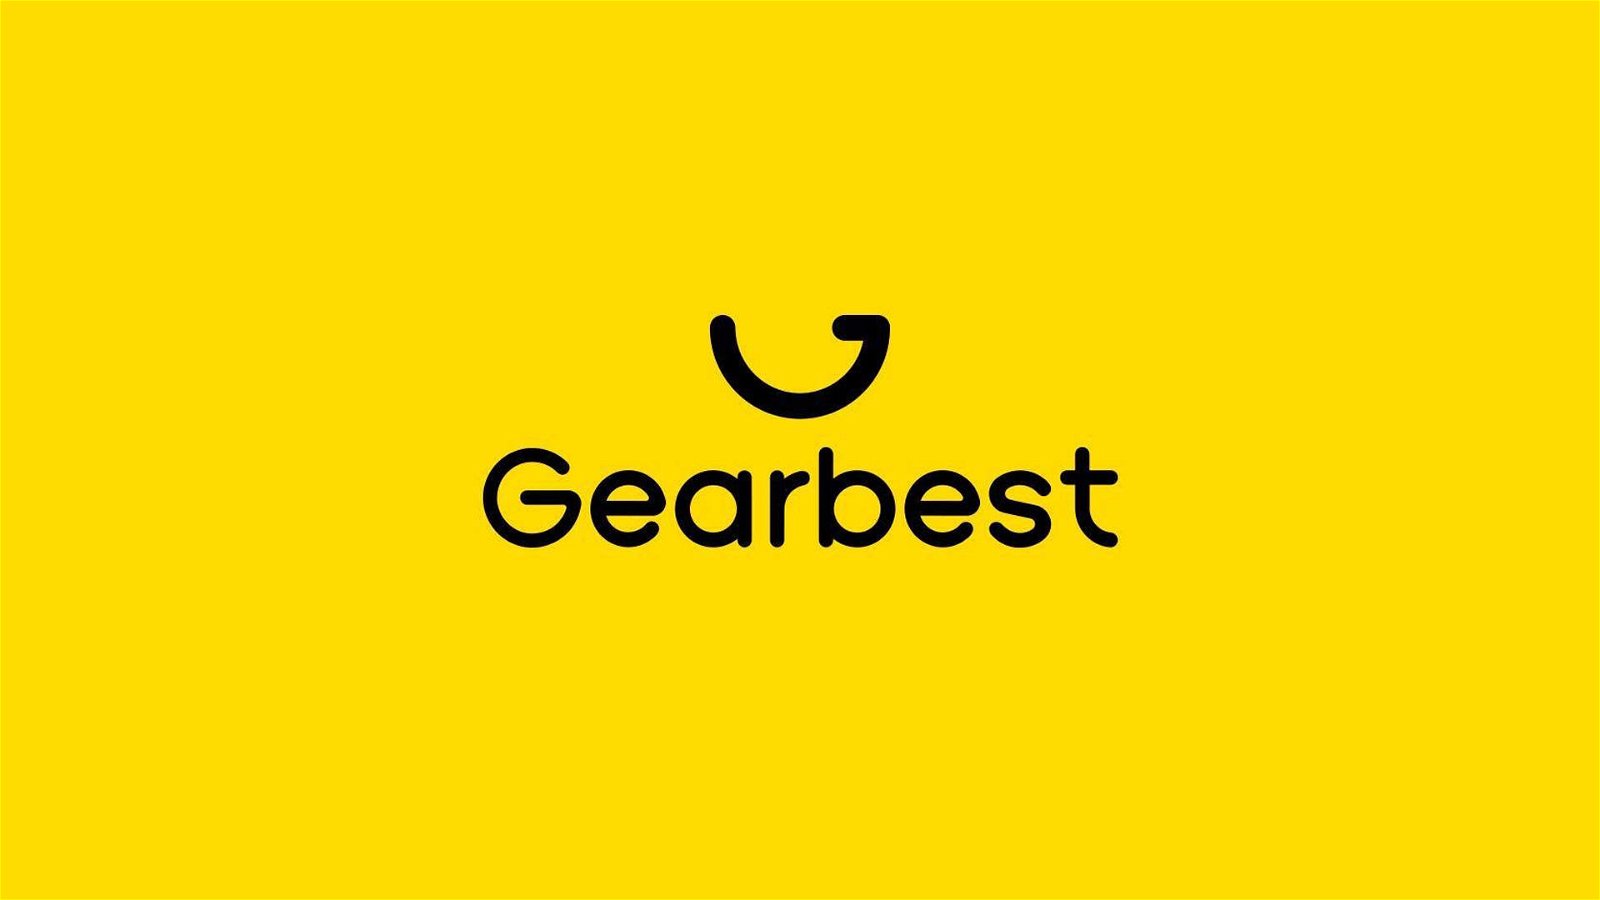 Immagine di Gearbest offline da giorni: cosa succede?